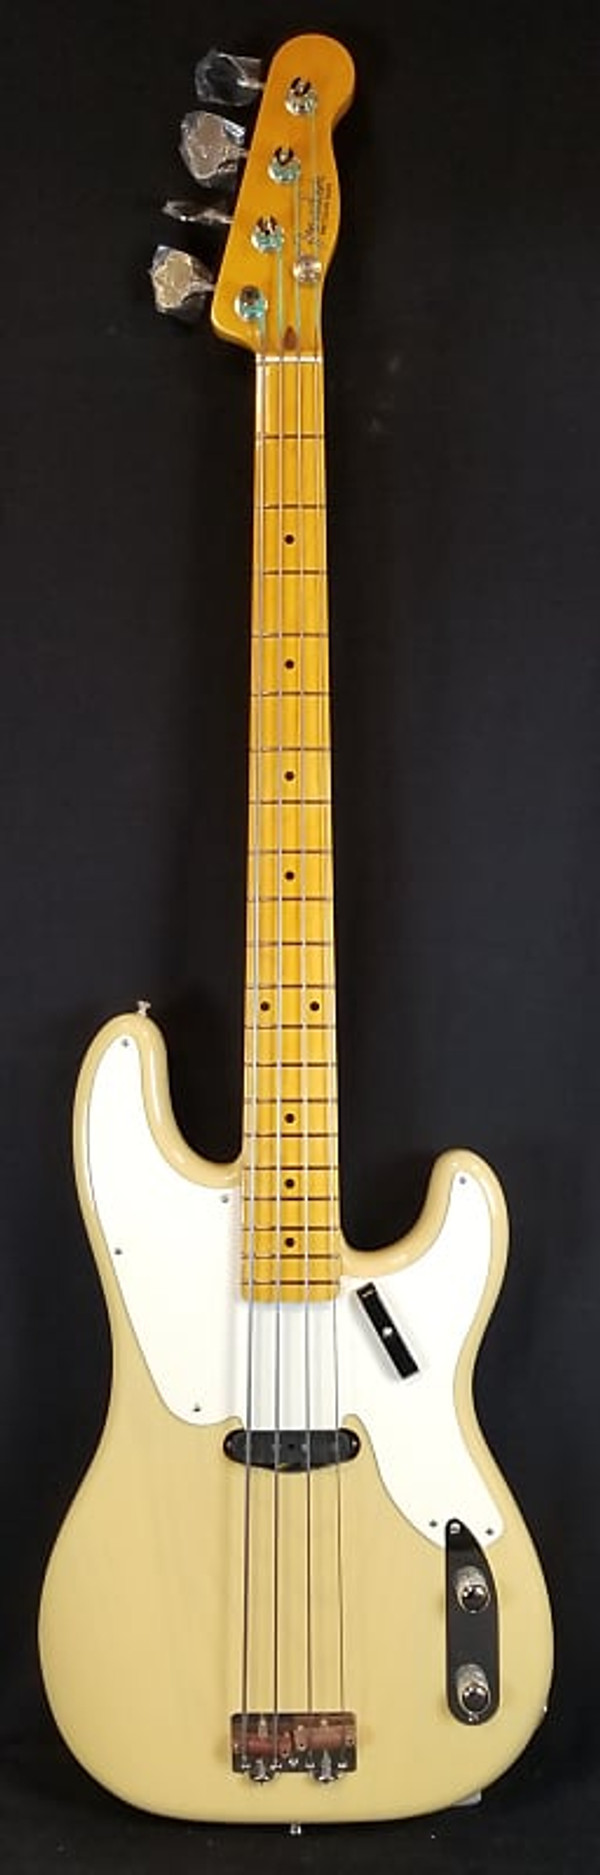 American Vintage II 1954 Precision Bass®Ash Body, Maple Fingerboard, Vintage Blonde